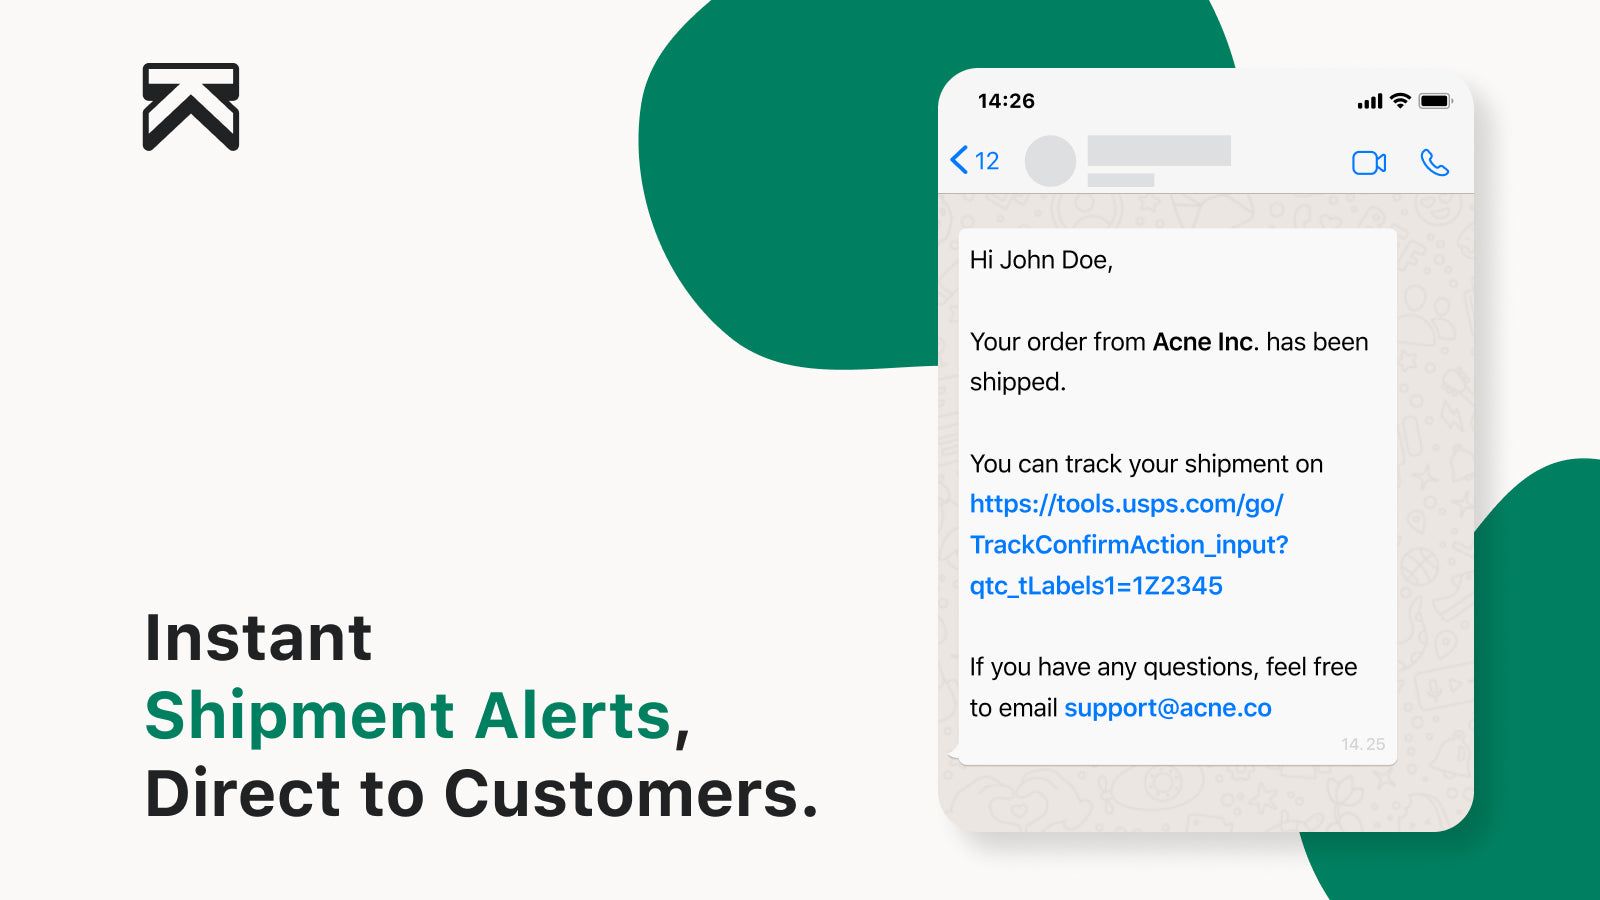 Instant Shipment Alerts on WhatsApp.